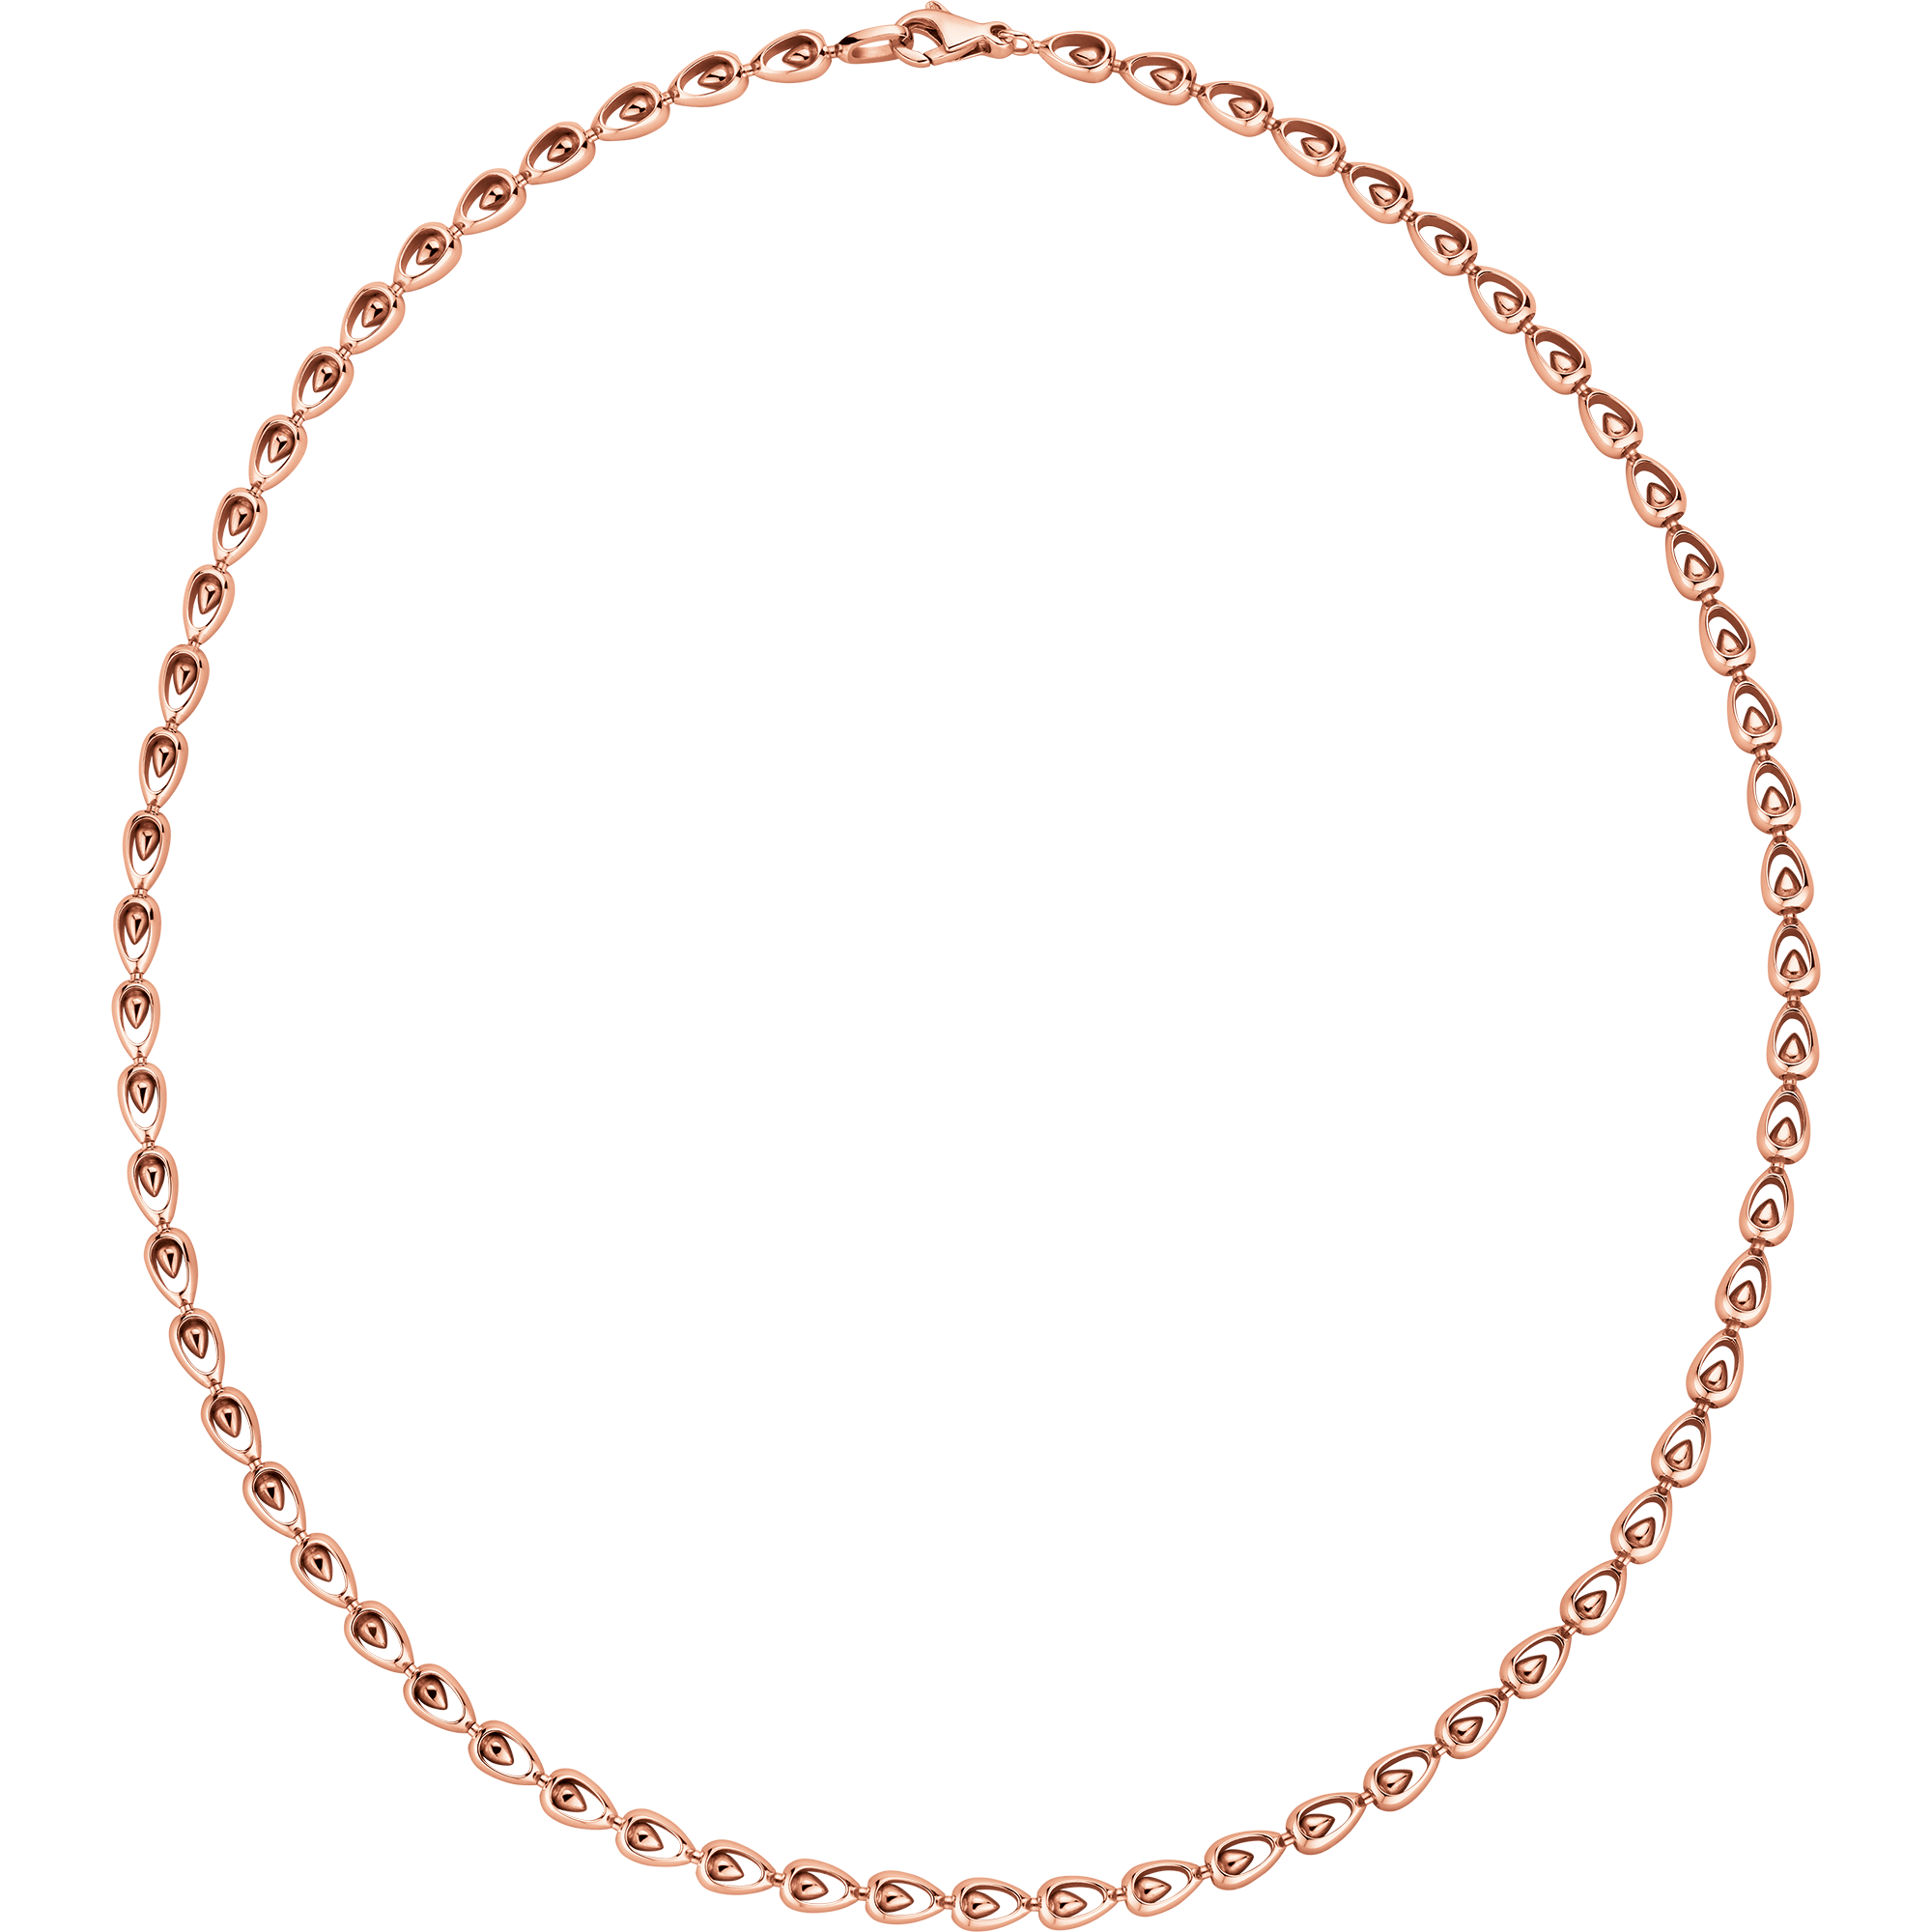 Omega Dewdrop Колье, Розовое золото 18K - N602BG0000105